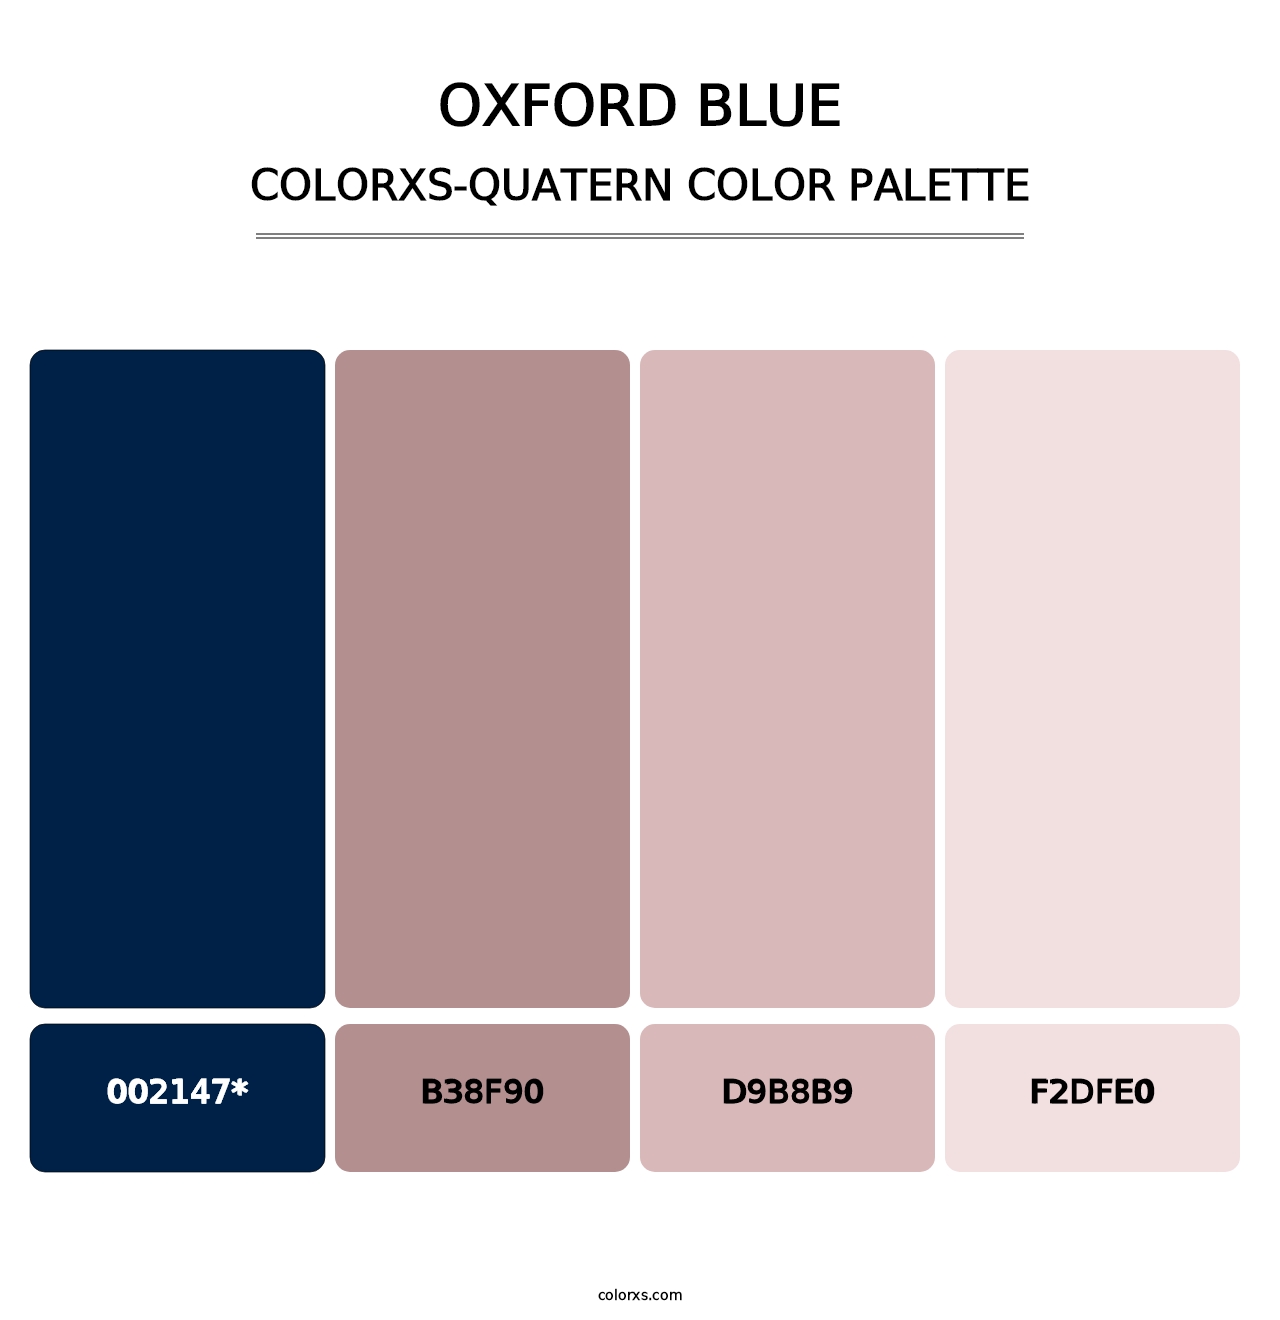 Oxford Blue - Colorxs Quatern Palette